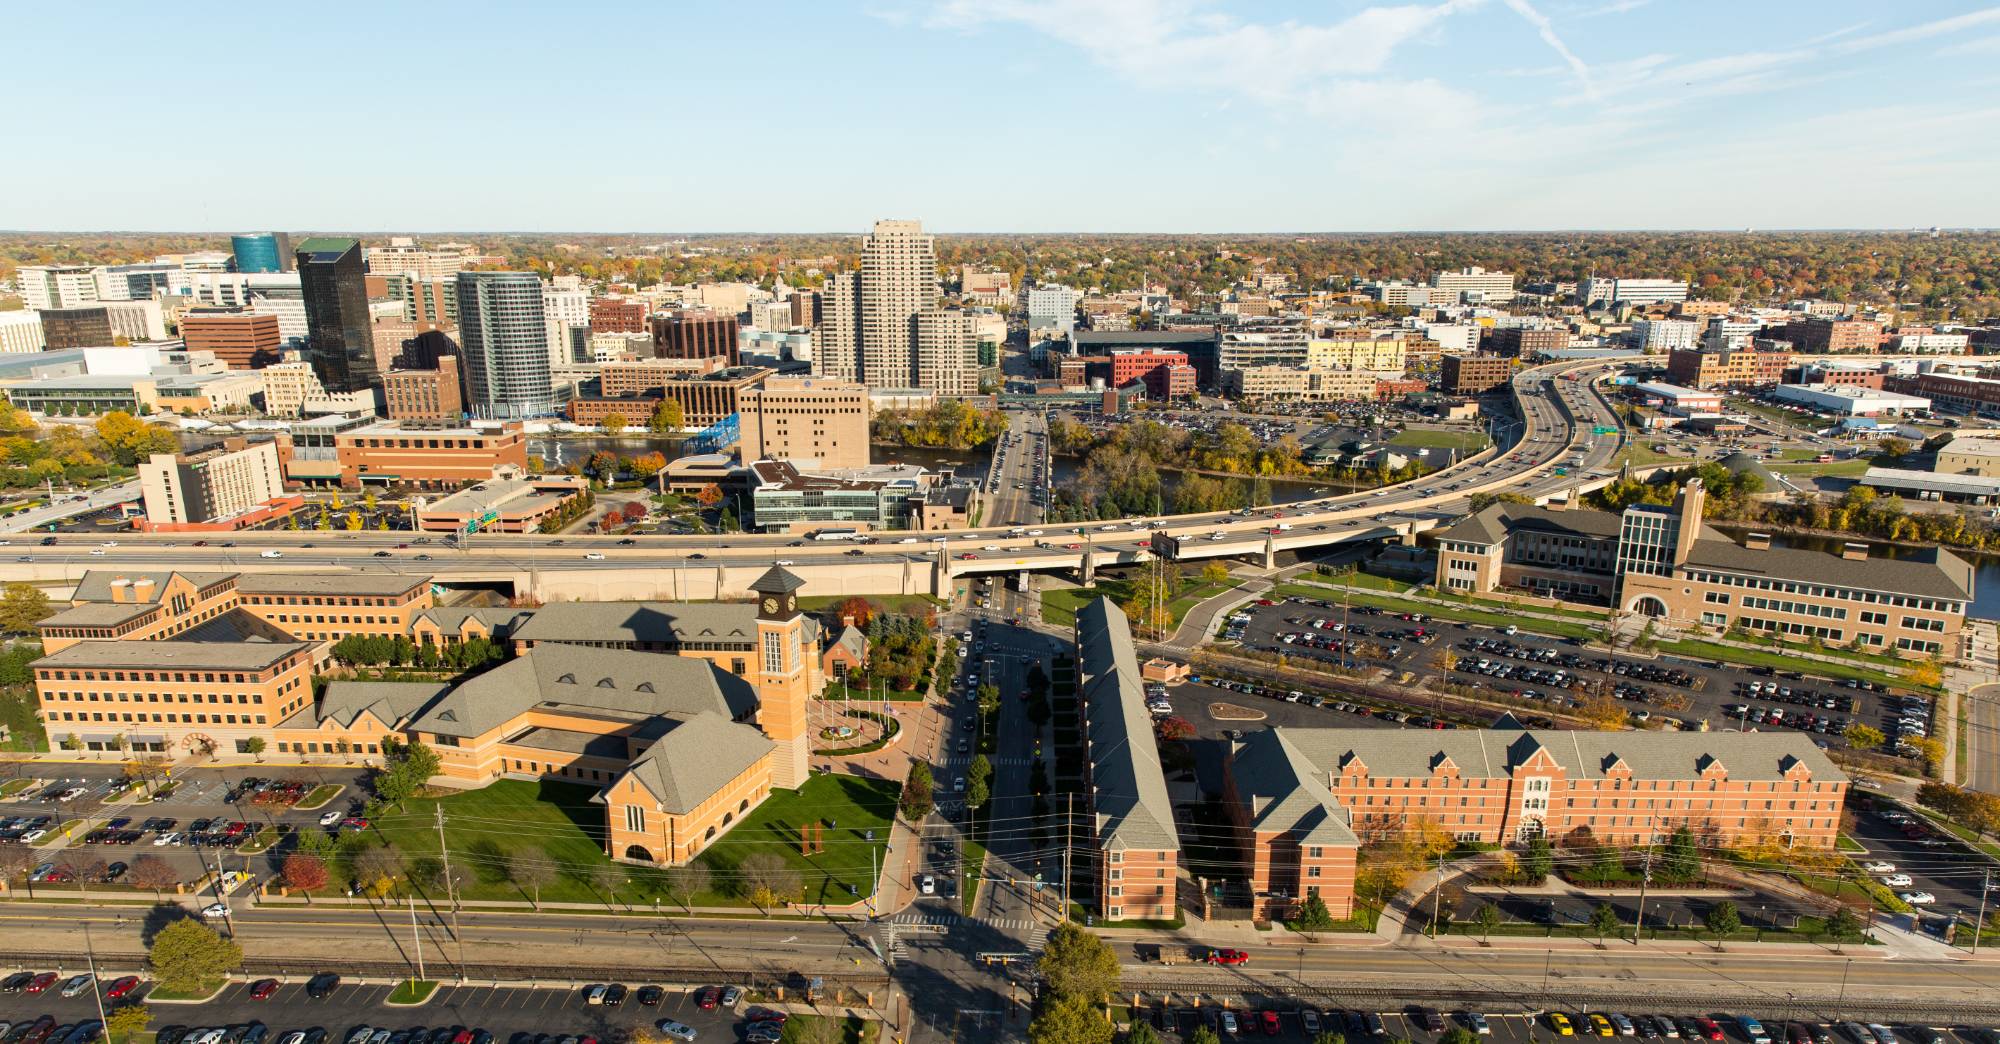 Aerial view of pew campus